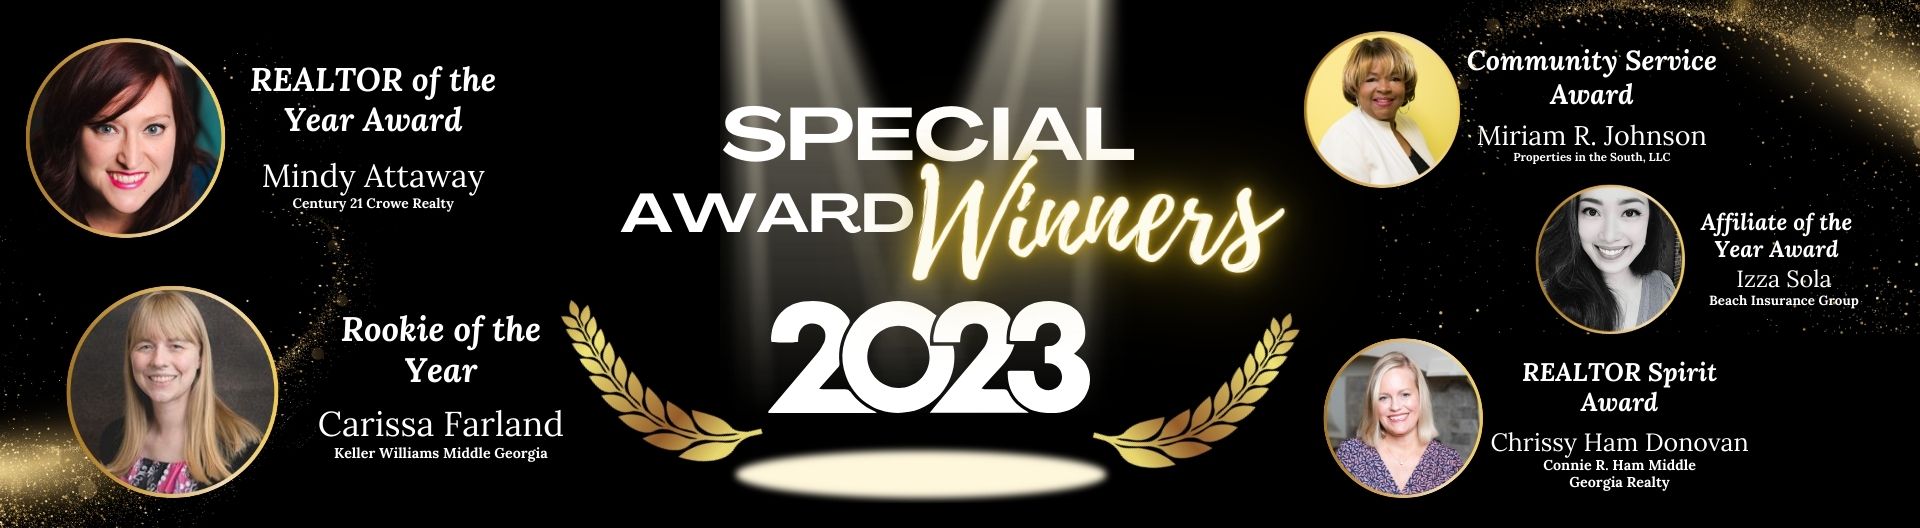 2023 Special Award Winners